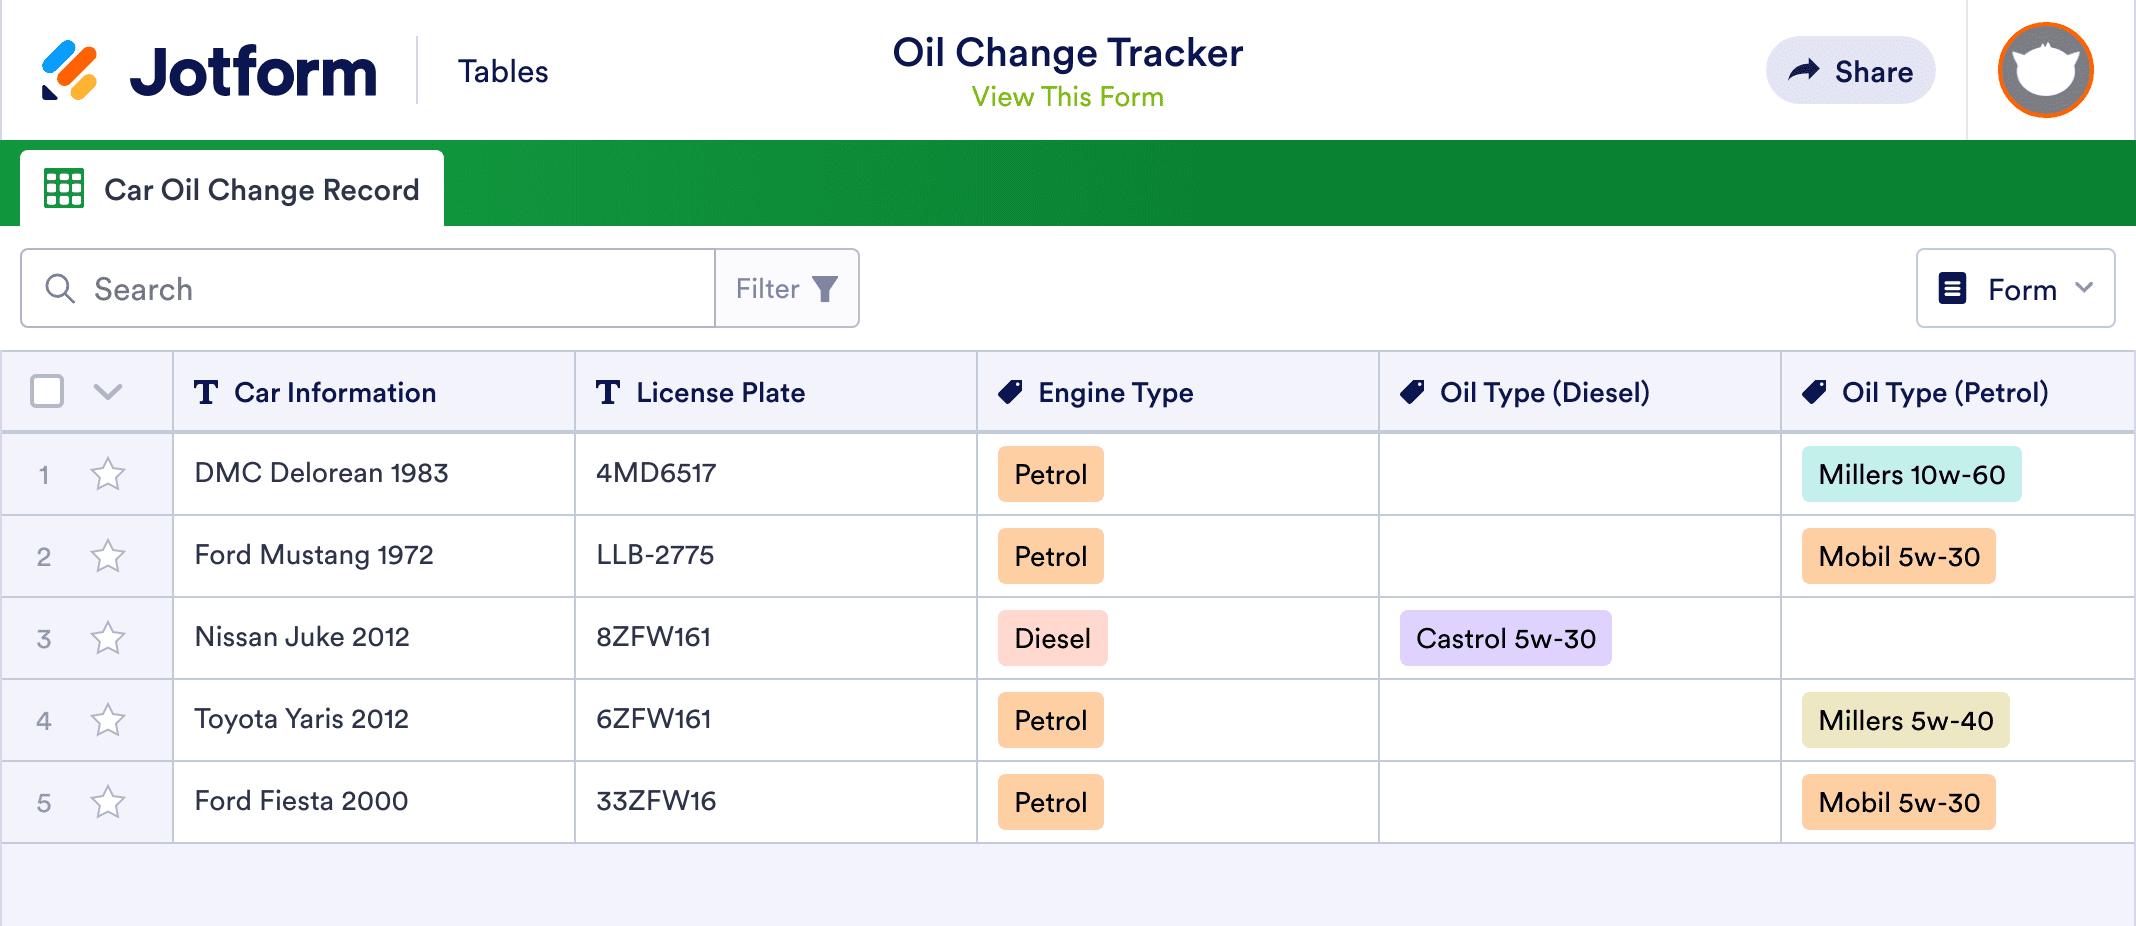 Oil Change Tracker